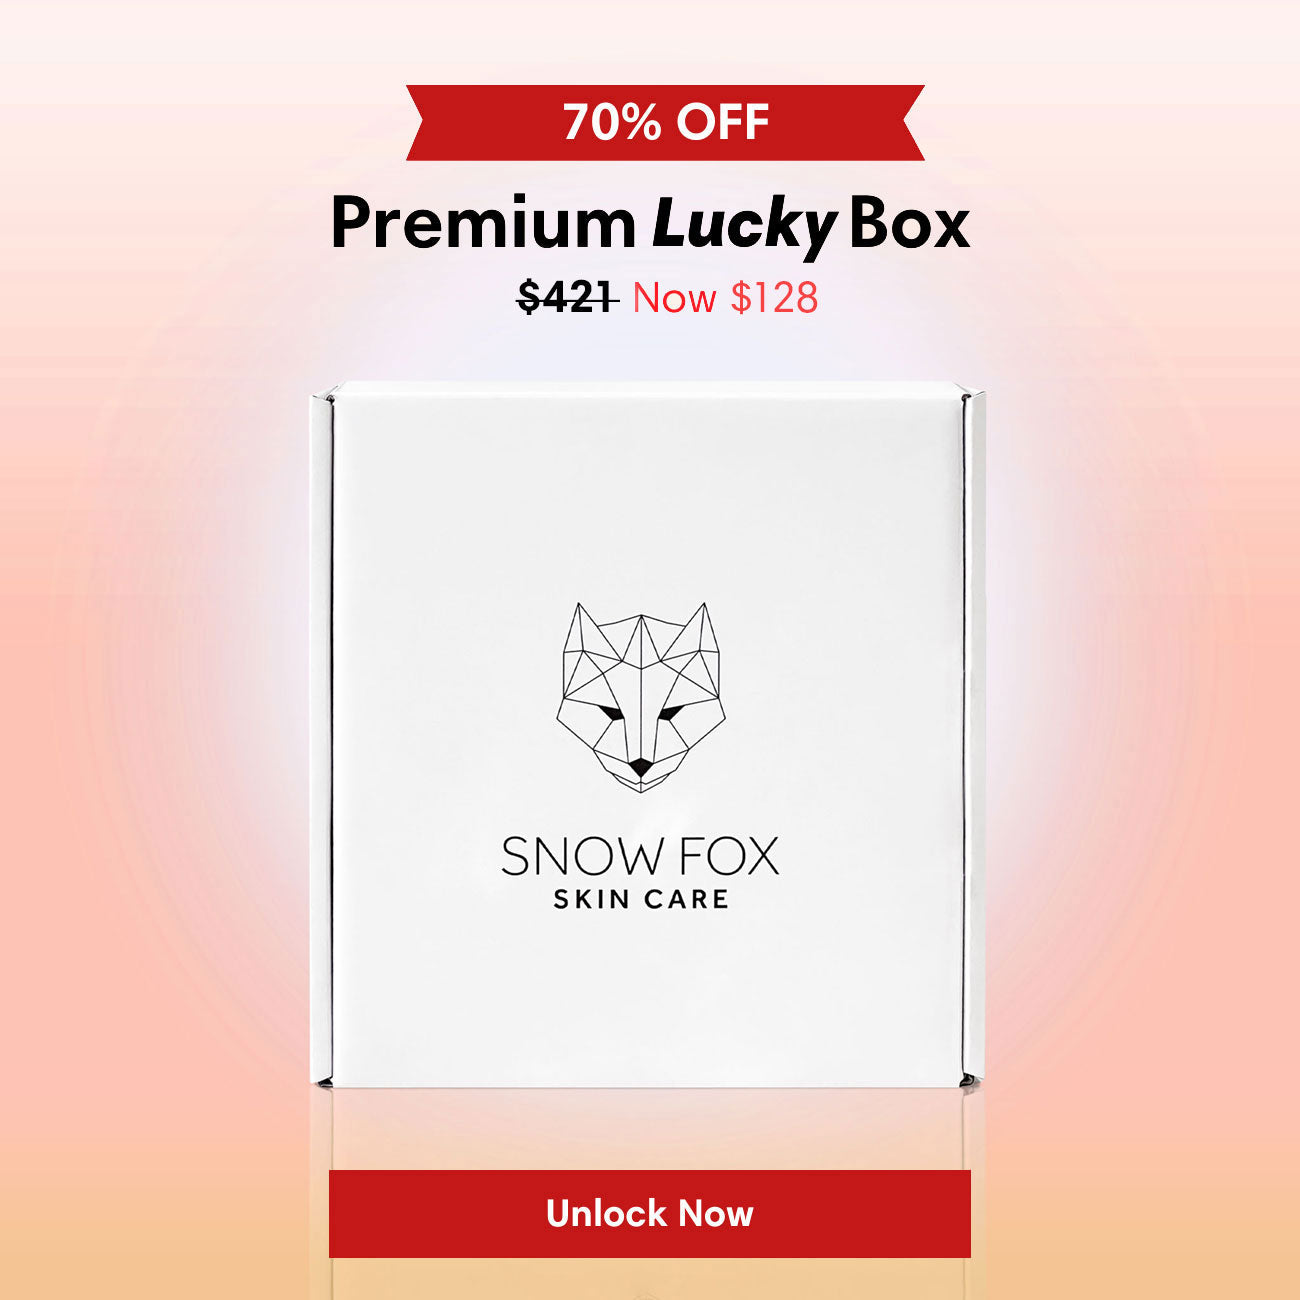 Premium Lucky Box